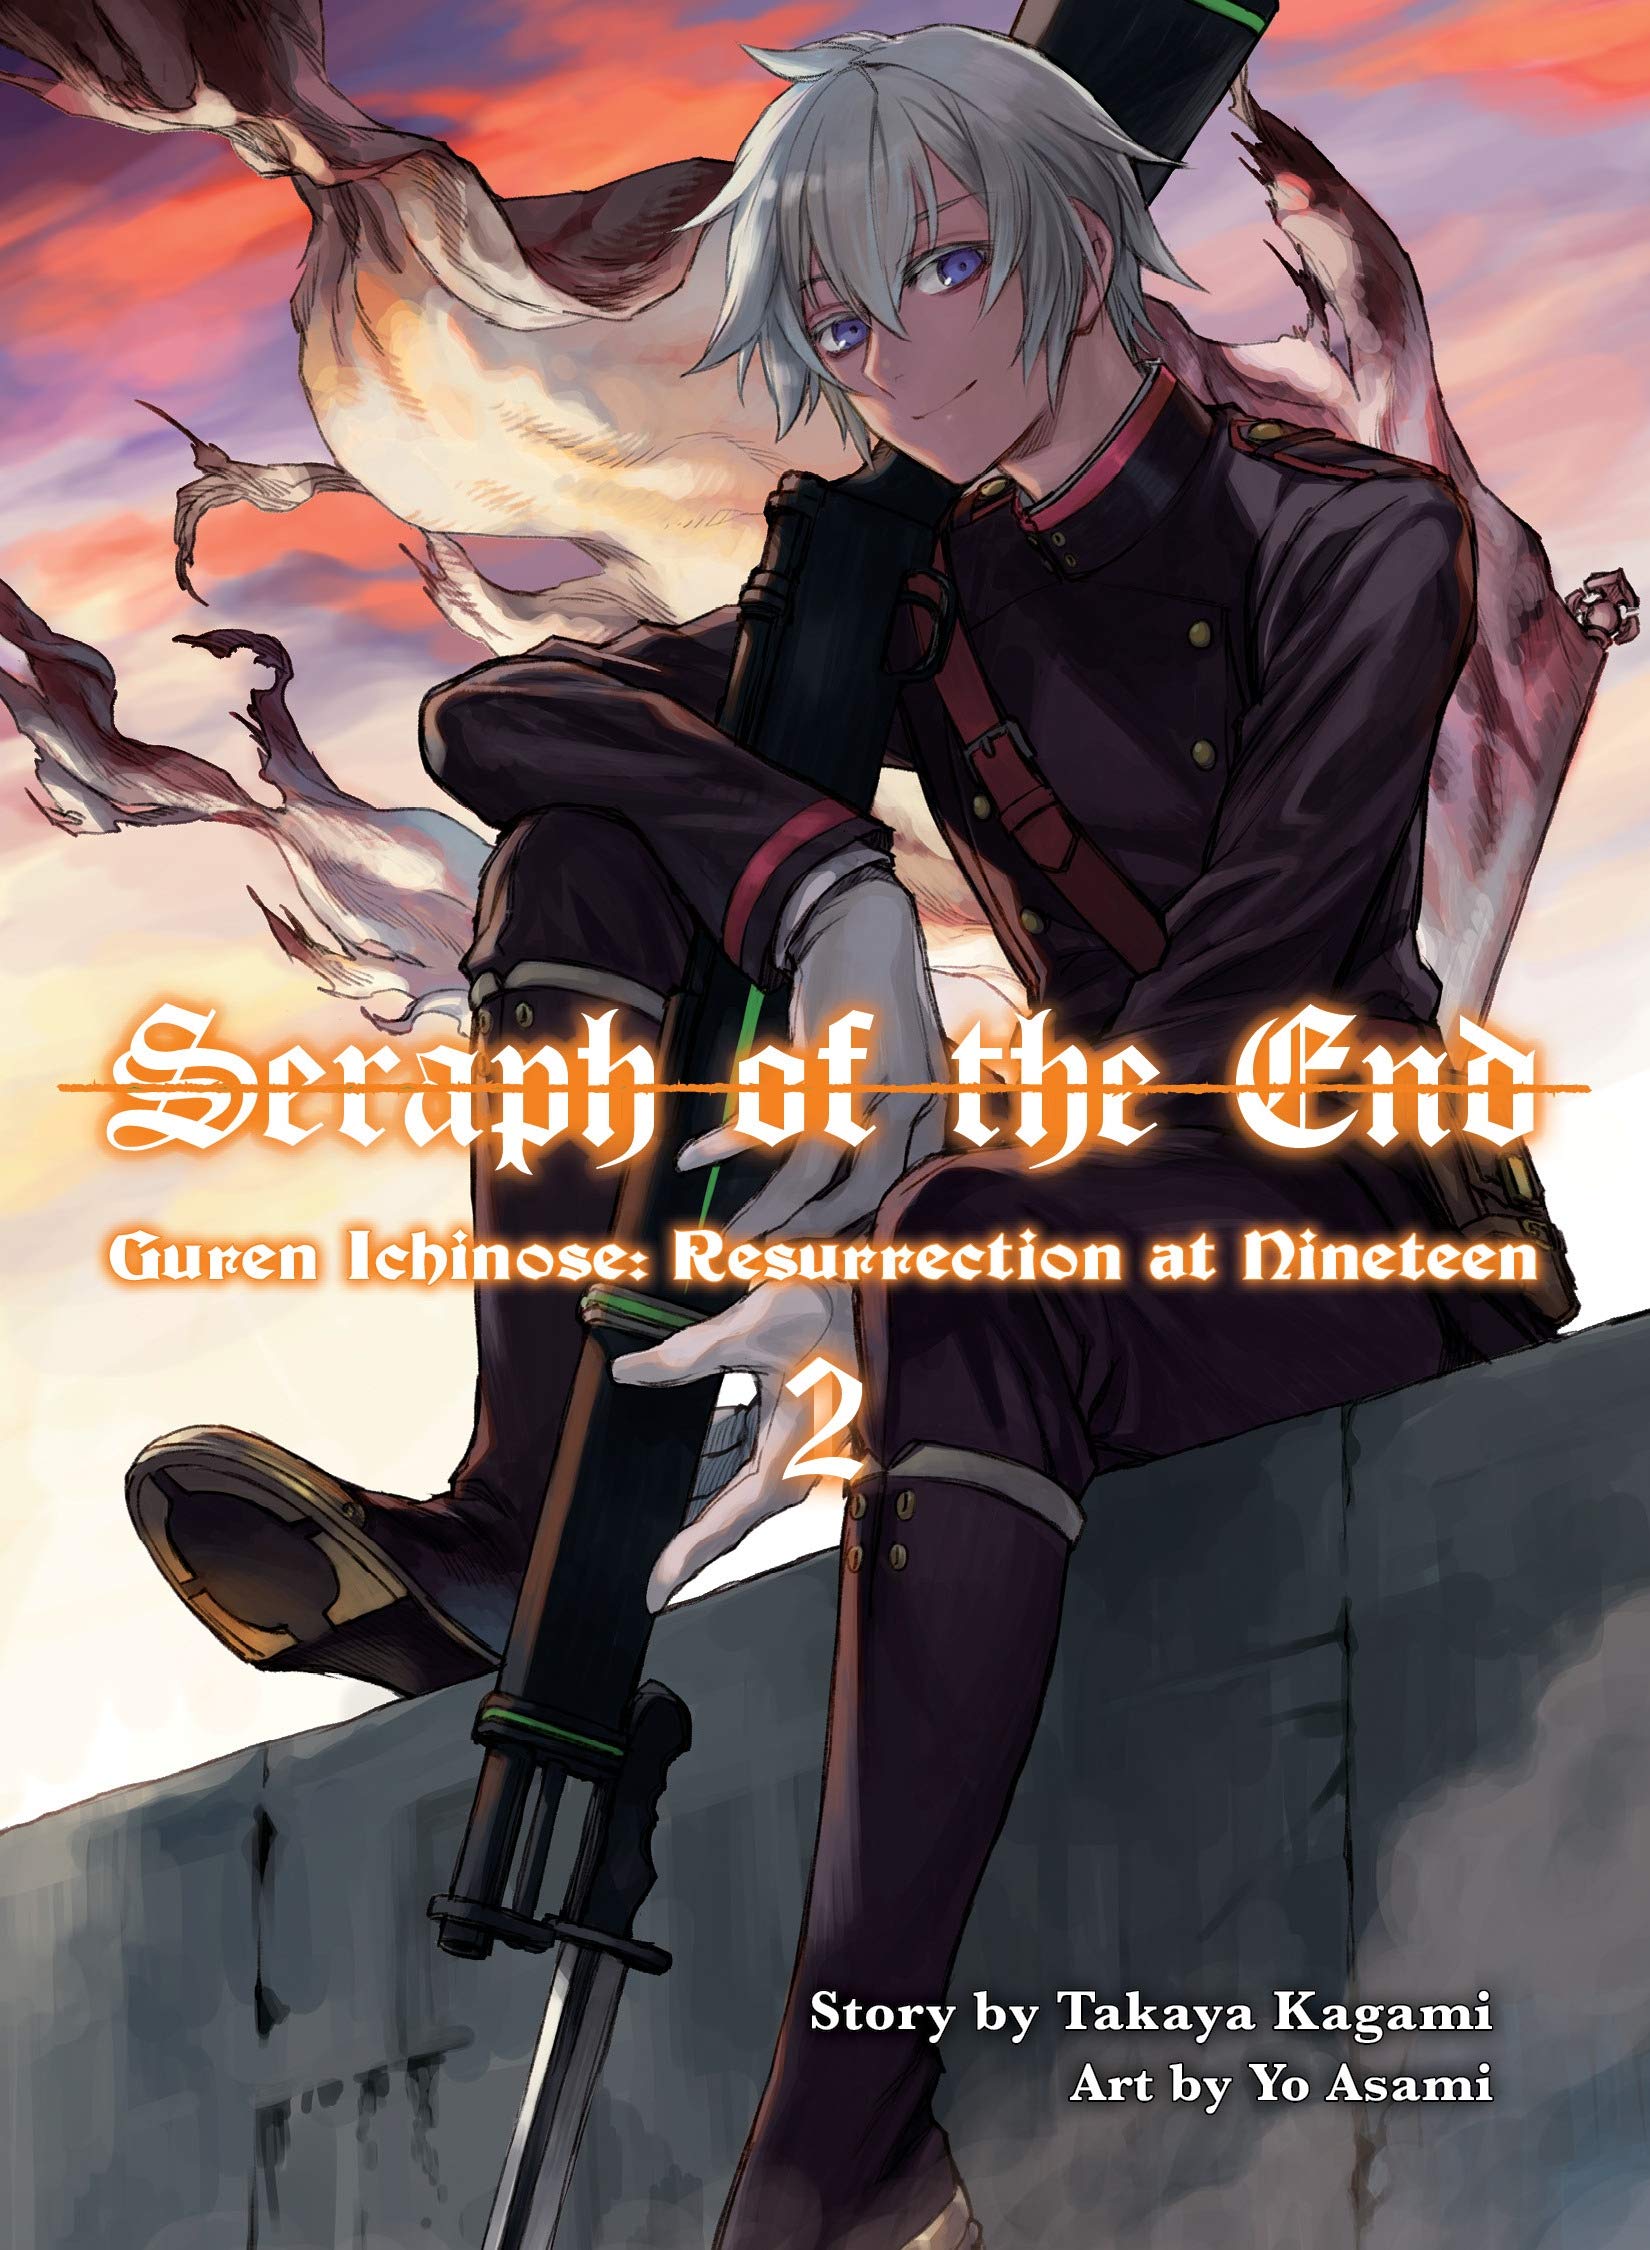 Vezi detalii pentru Seraph of the End: Guren Ichinose, Resurrection at Nineteen - Volume 2 (Light Novel) | Takaya Kagami